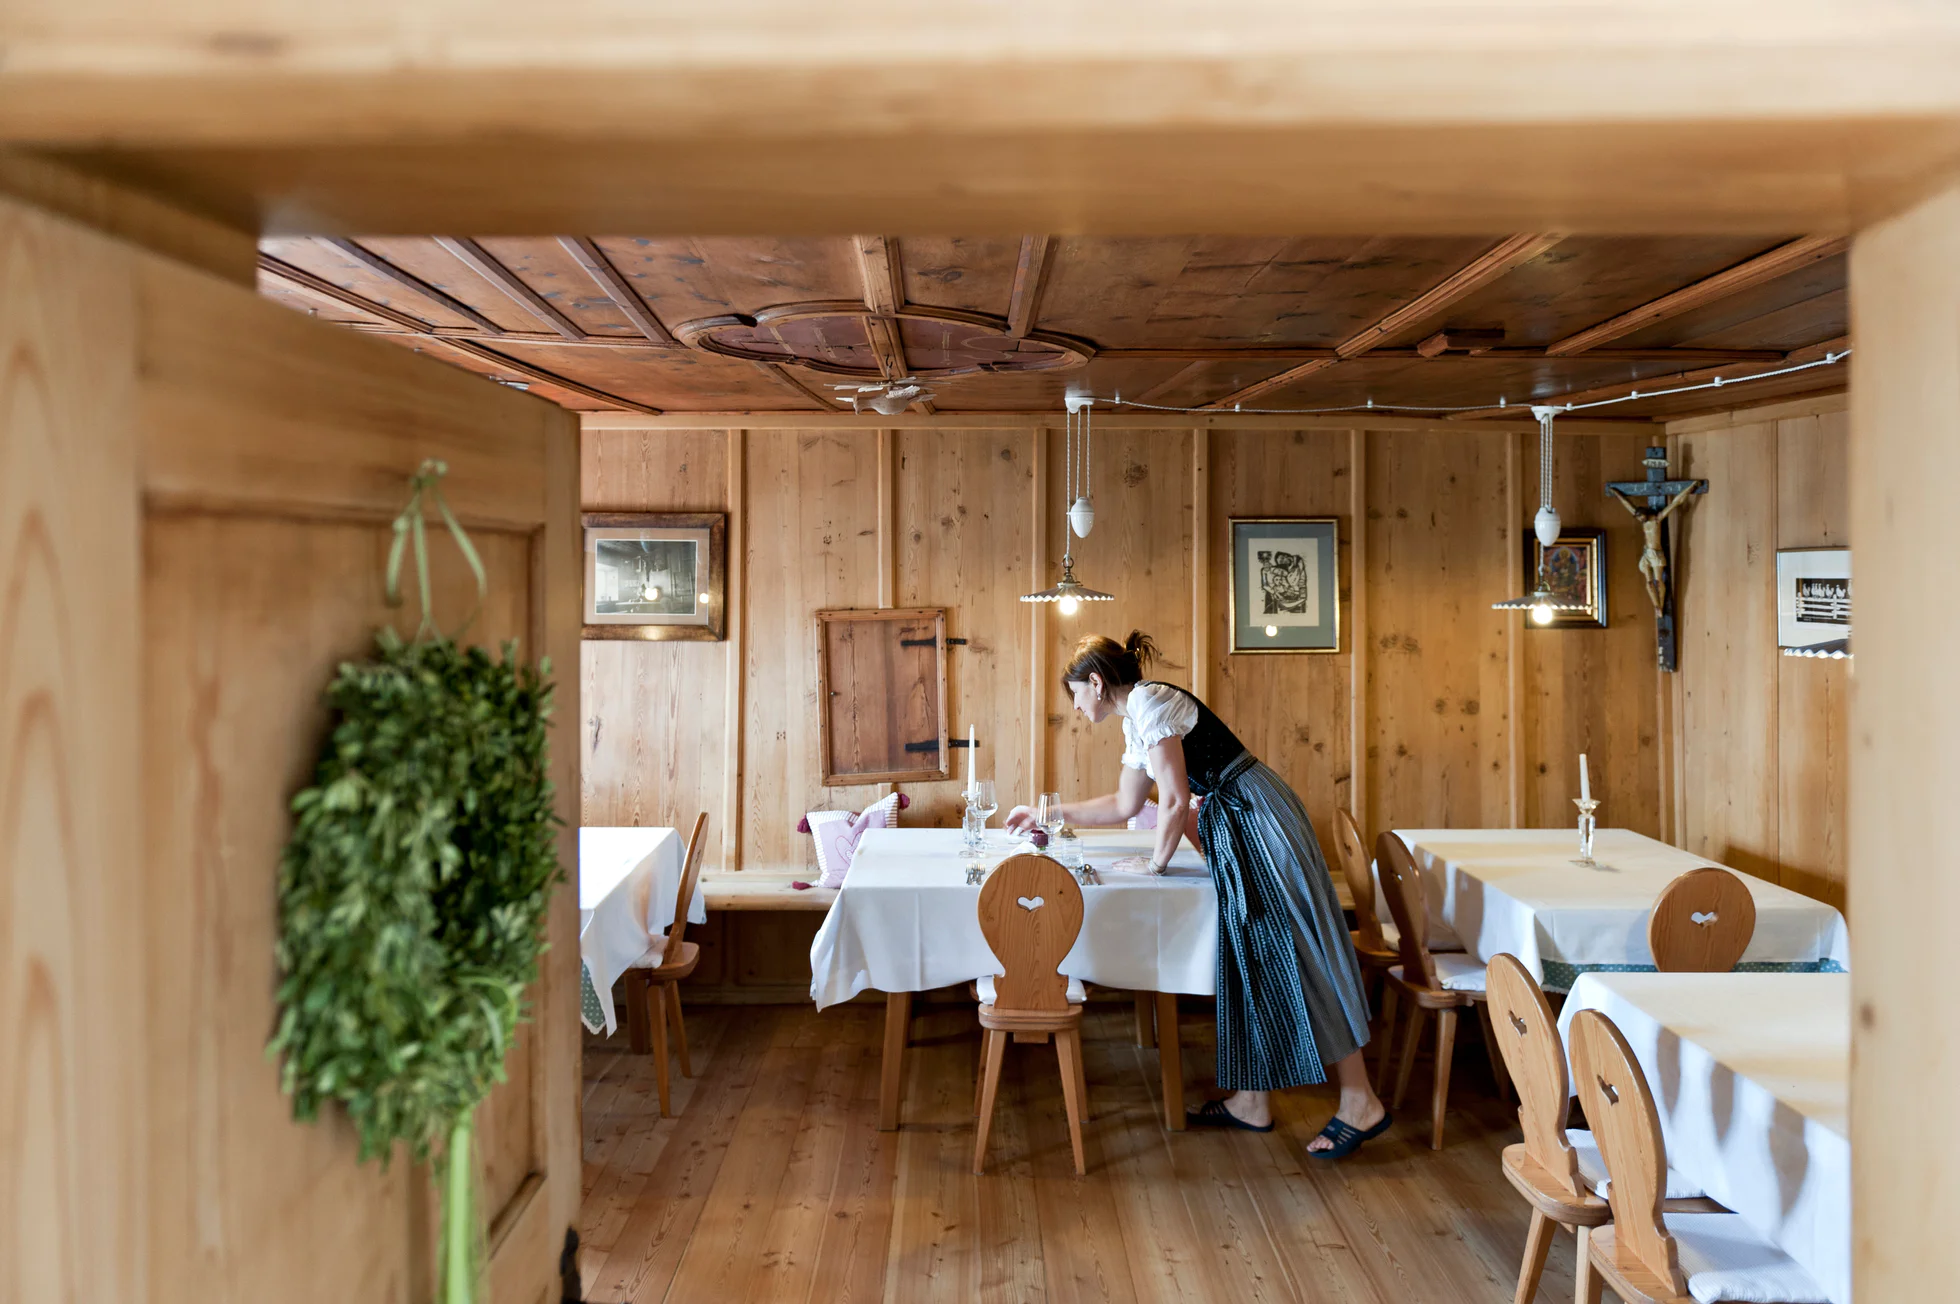 An inn in South Tyrol